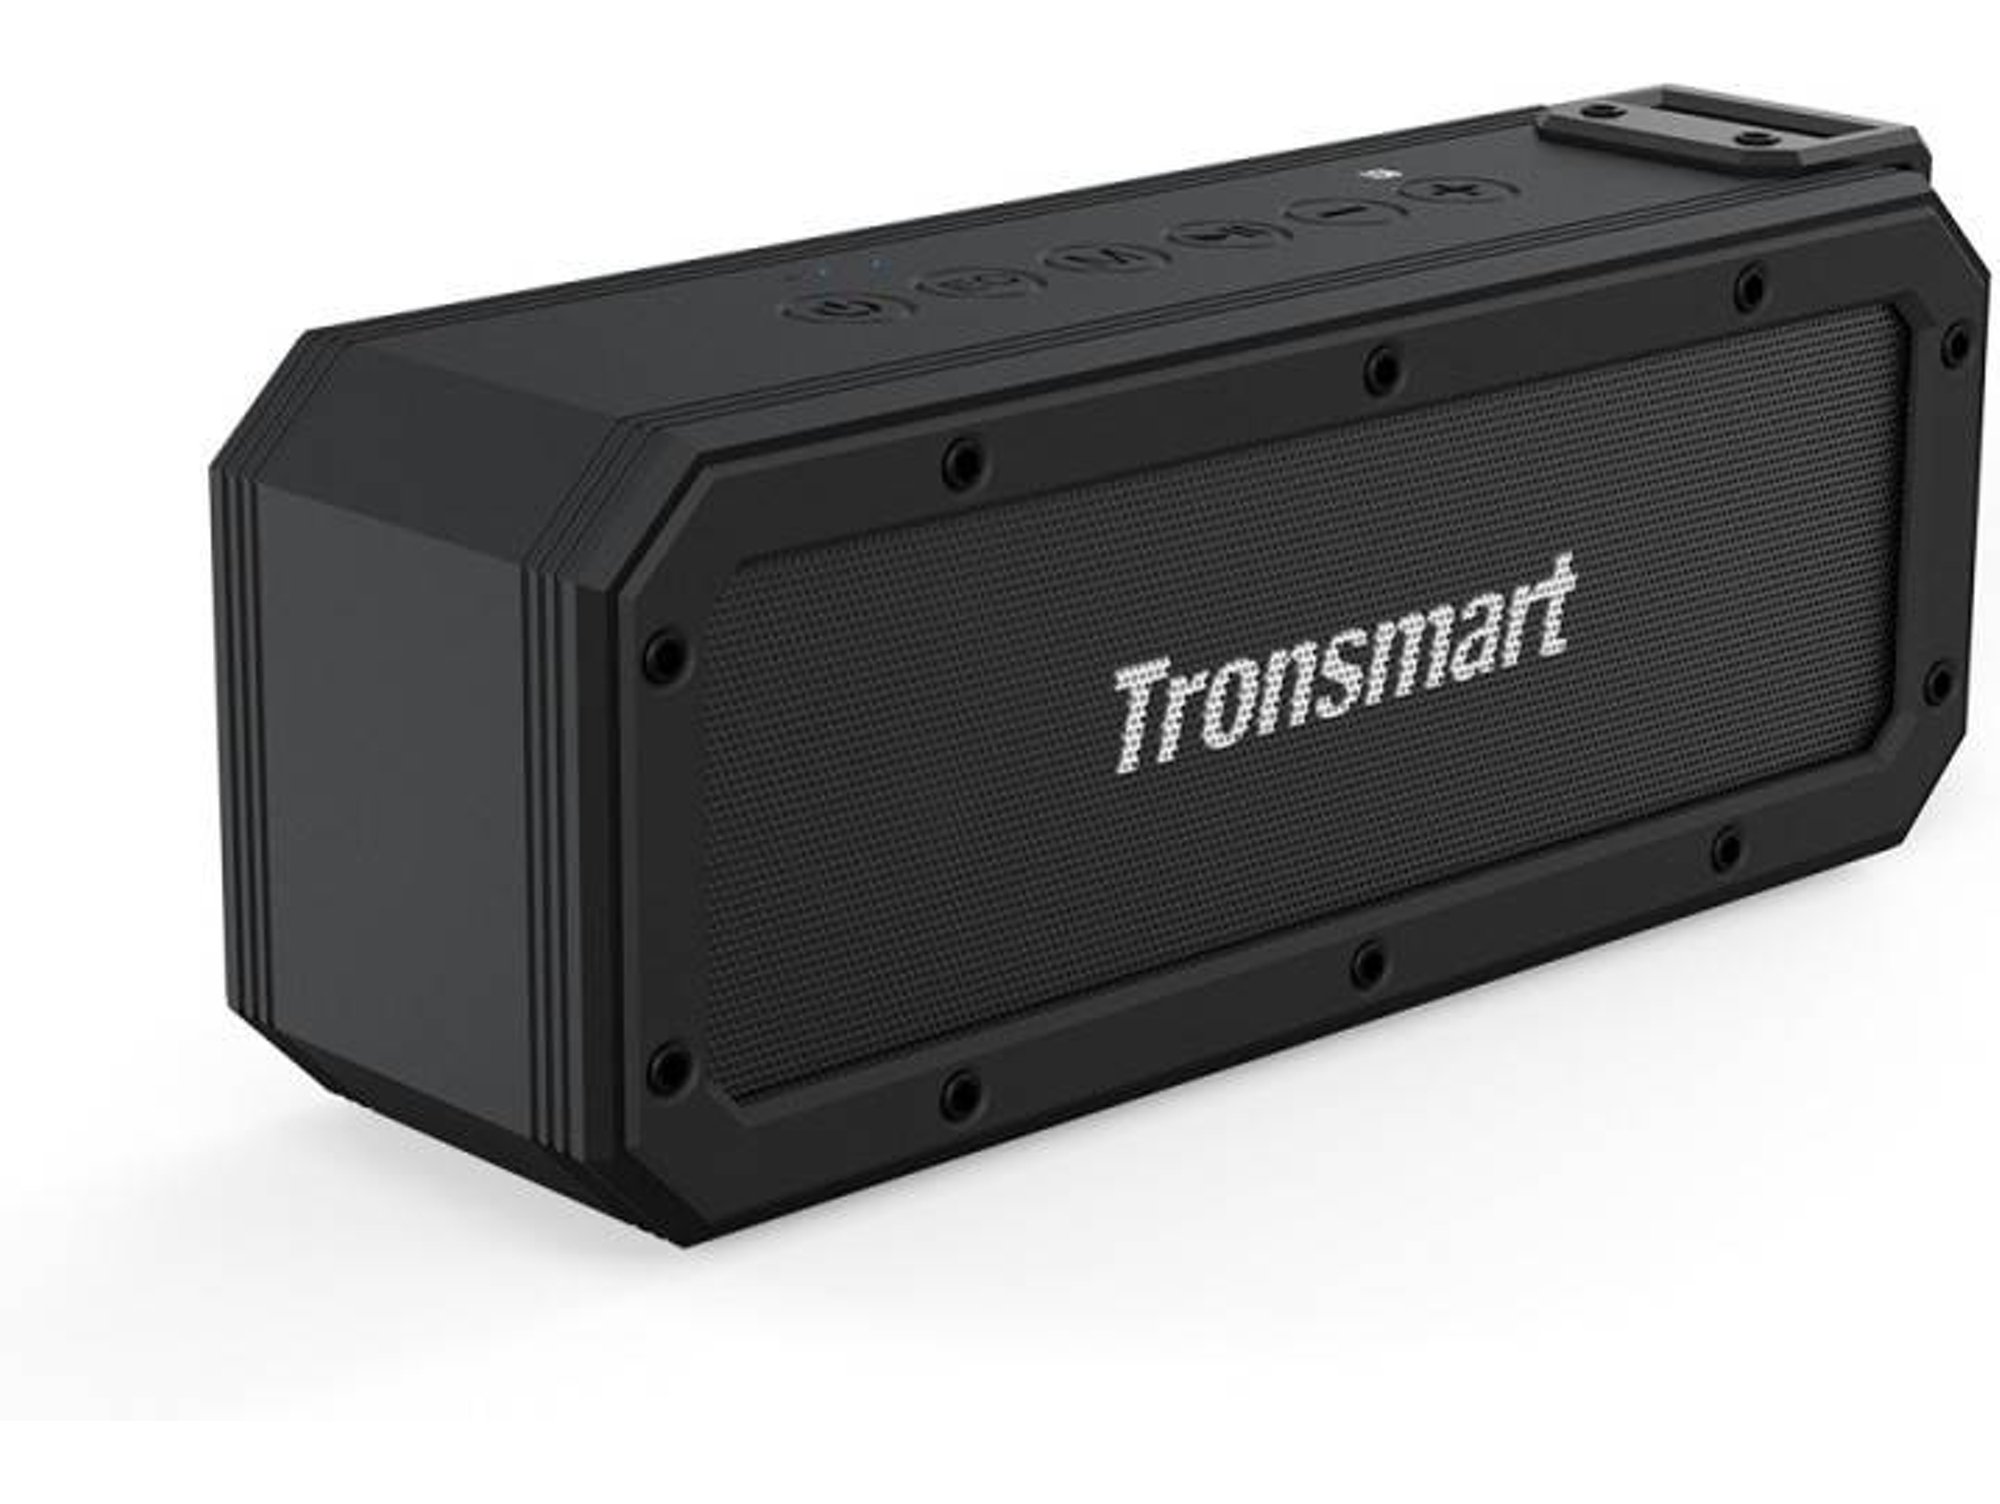 Altavoz Bluetooth TRONSMART Element Force + (40 W)